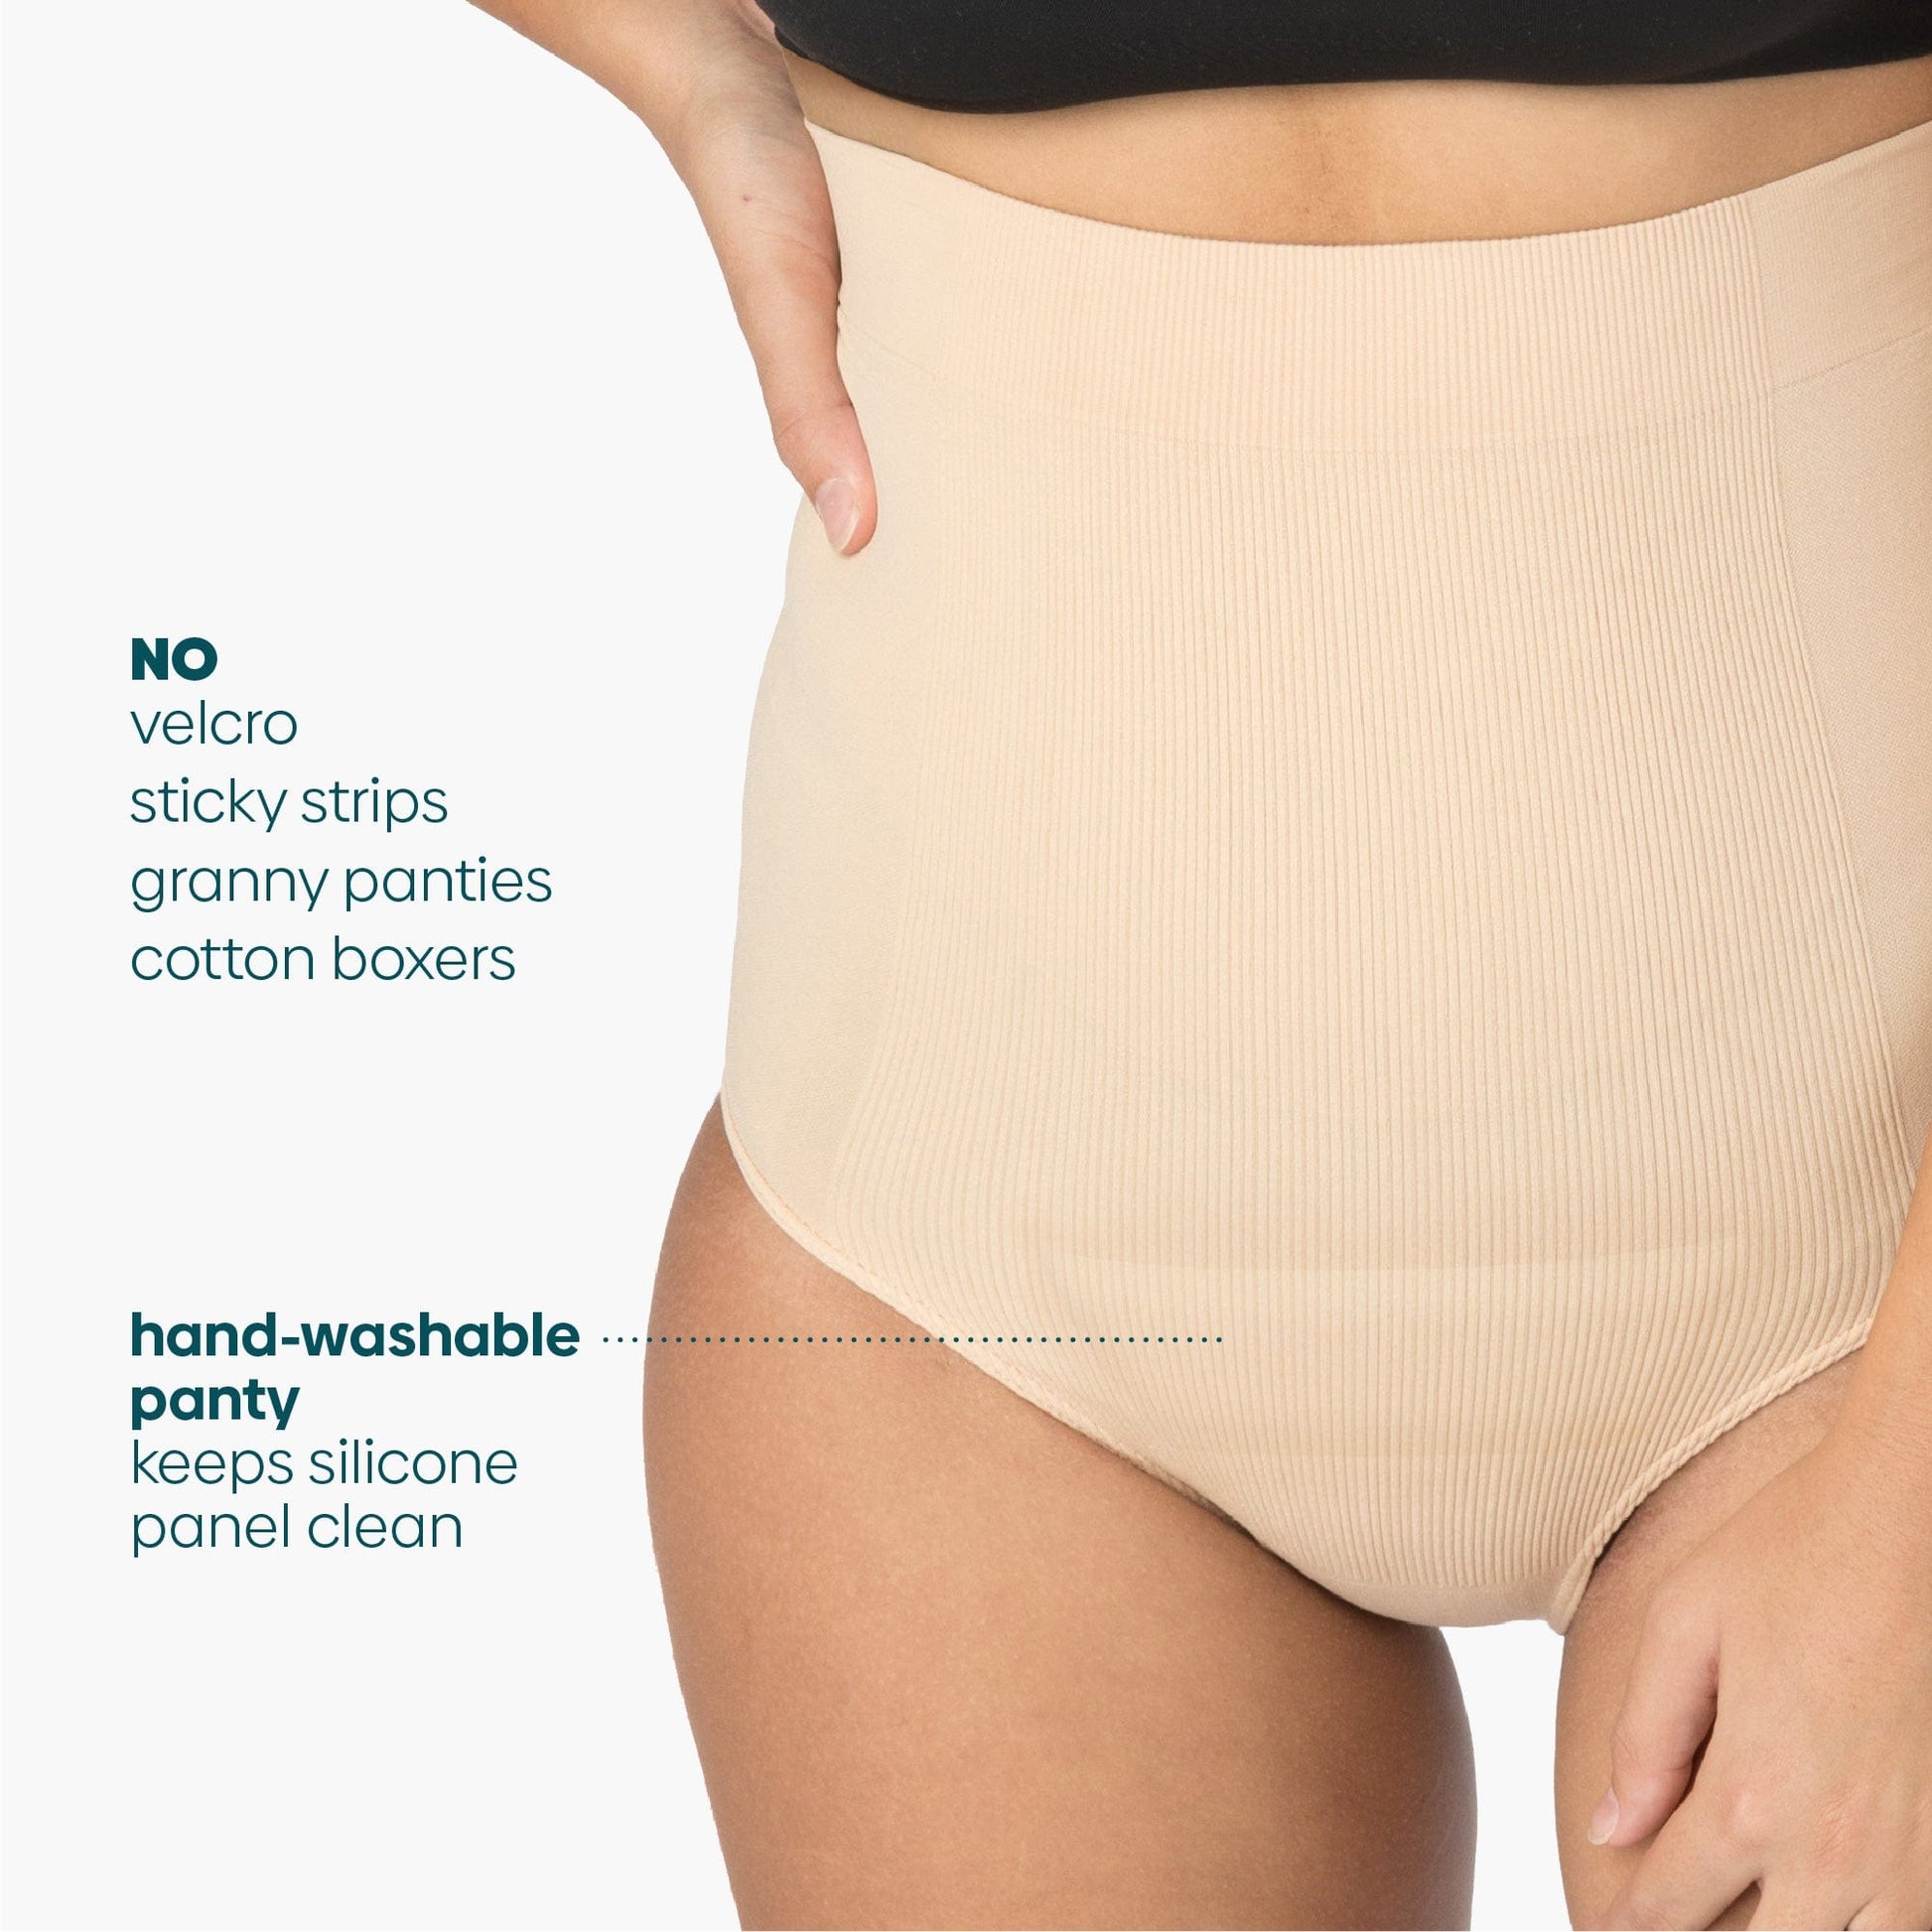 Women's Jockey 3-Pack Bikini (GRAY ASST) 100% Cotton Comfort Panty